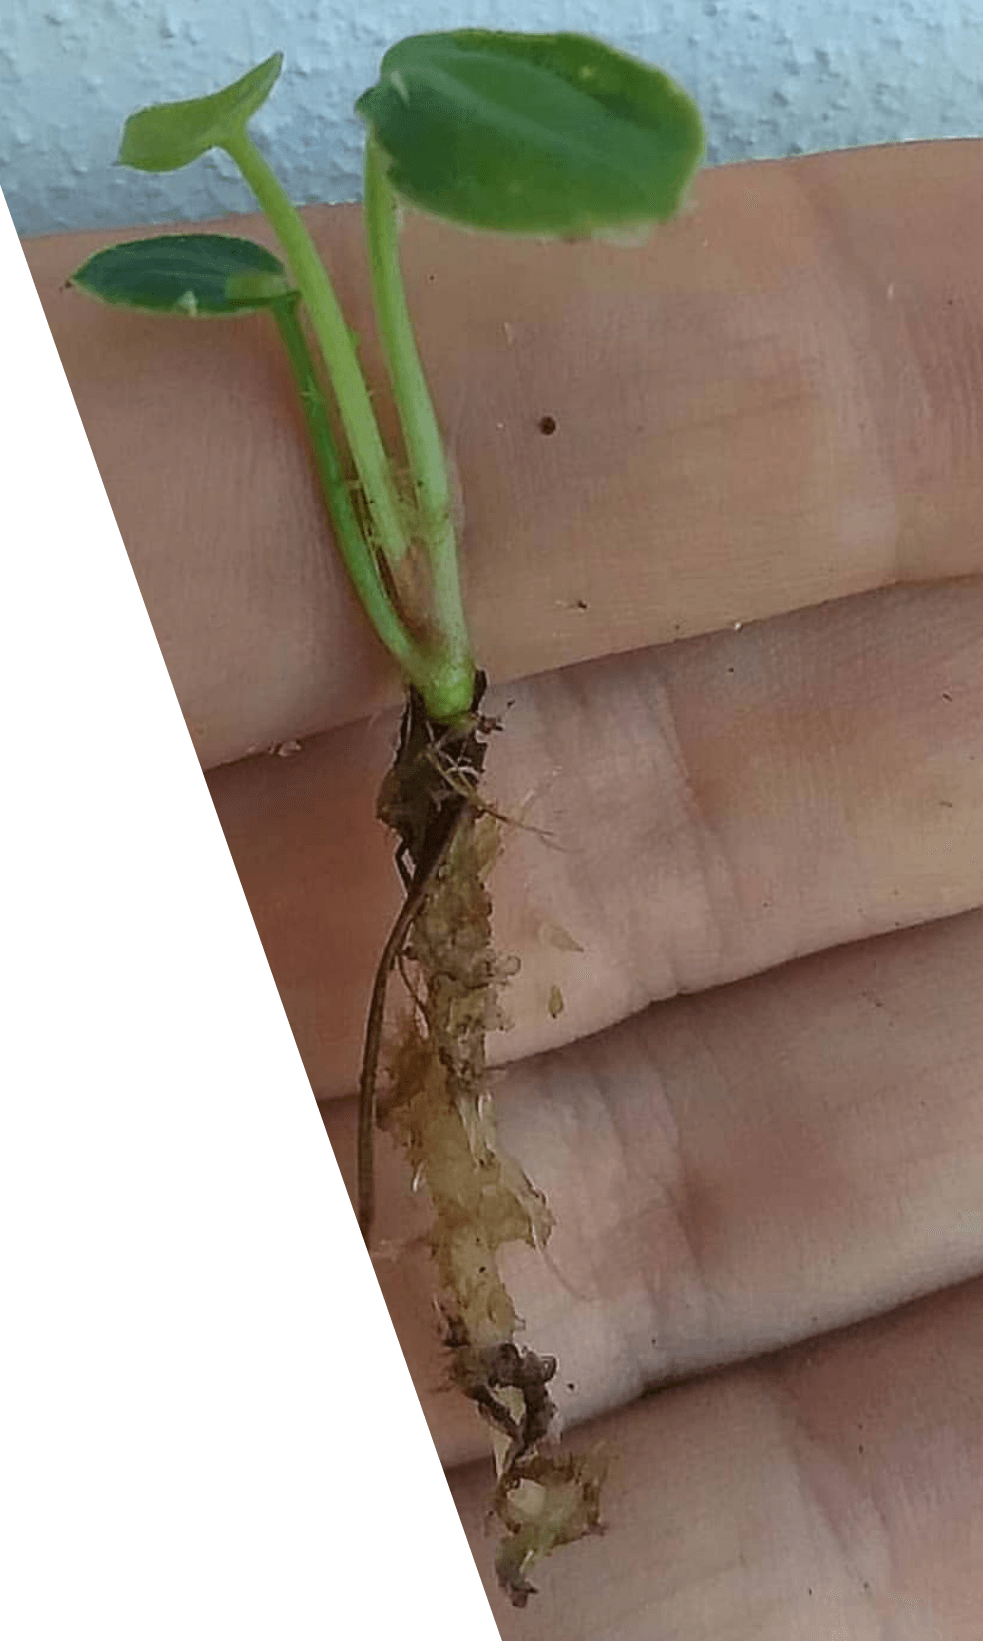 Anthurium clarinervium seedling (16 weeks)